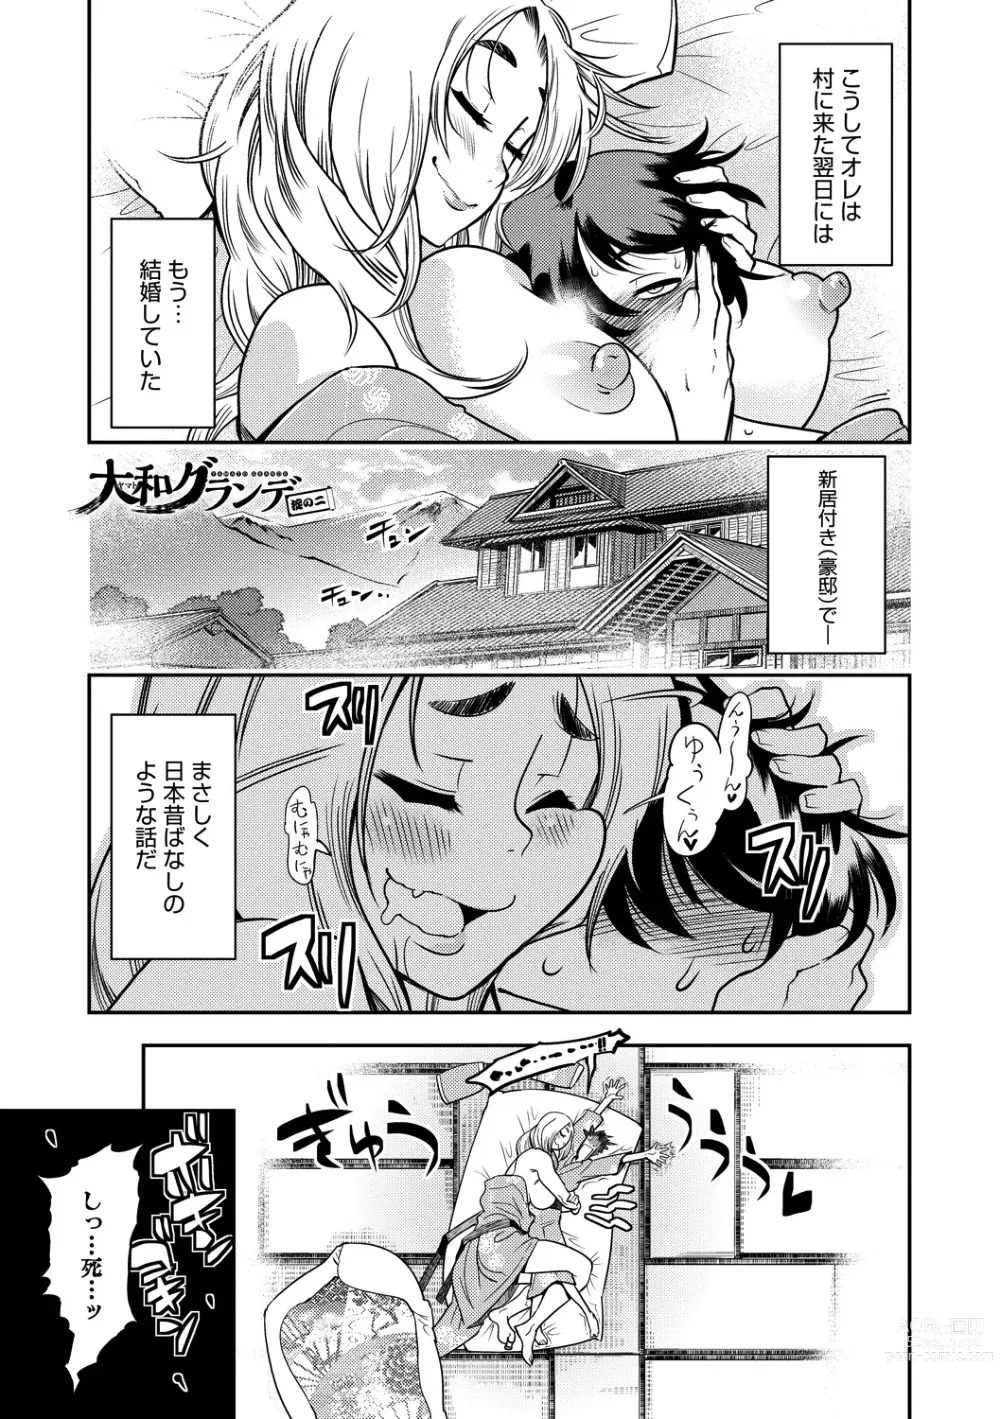 Page 31 of manga Hamekko 3Peace!!!